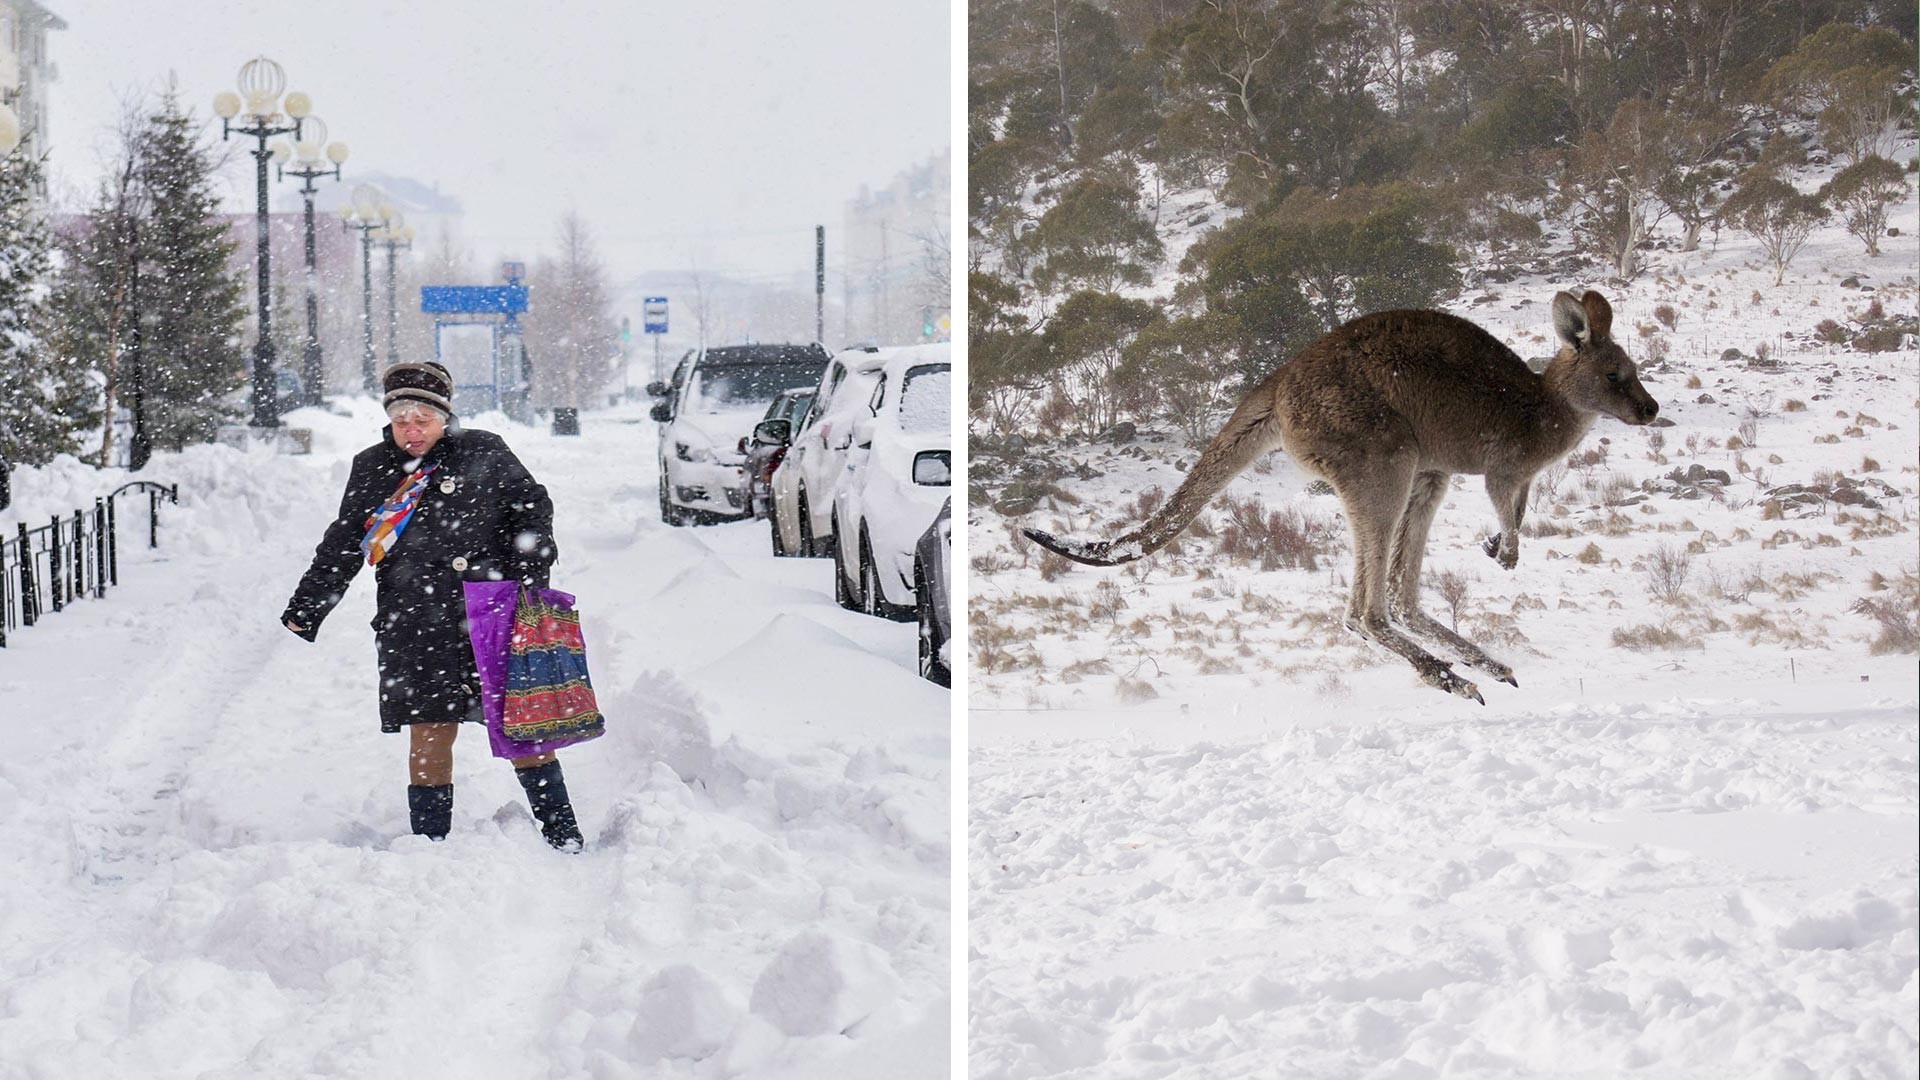 Left: Heavy snowfall in Salekhard in the late spring. Right: A kangaroo enjoys the snow in Australia.